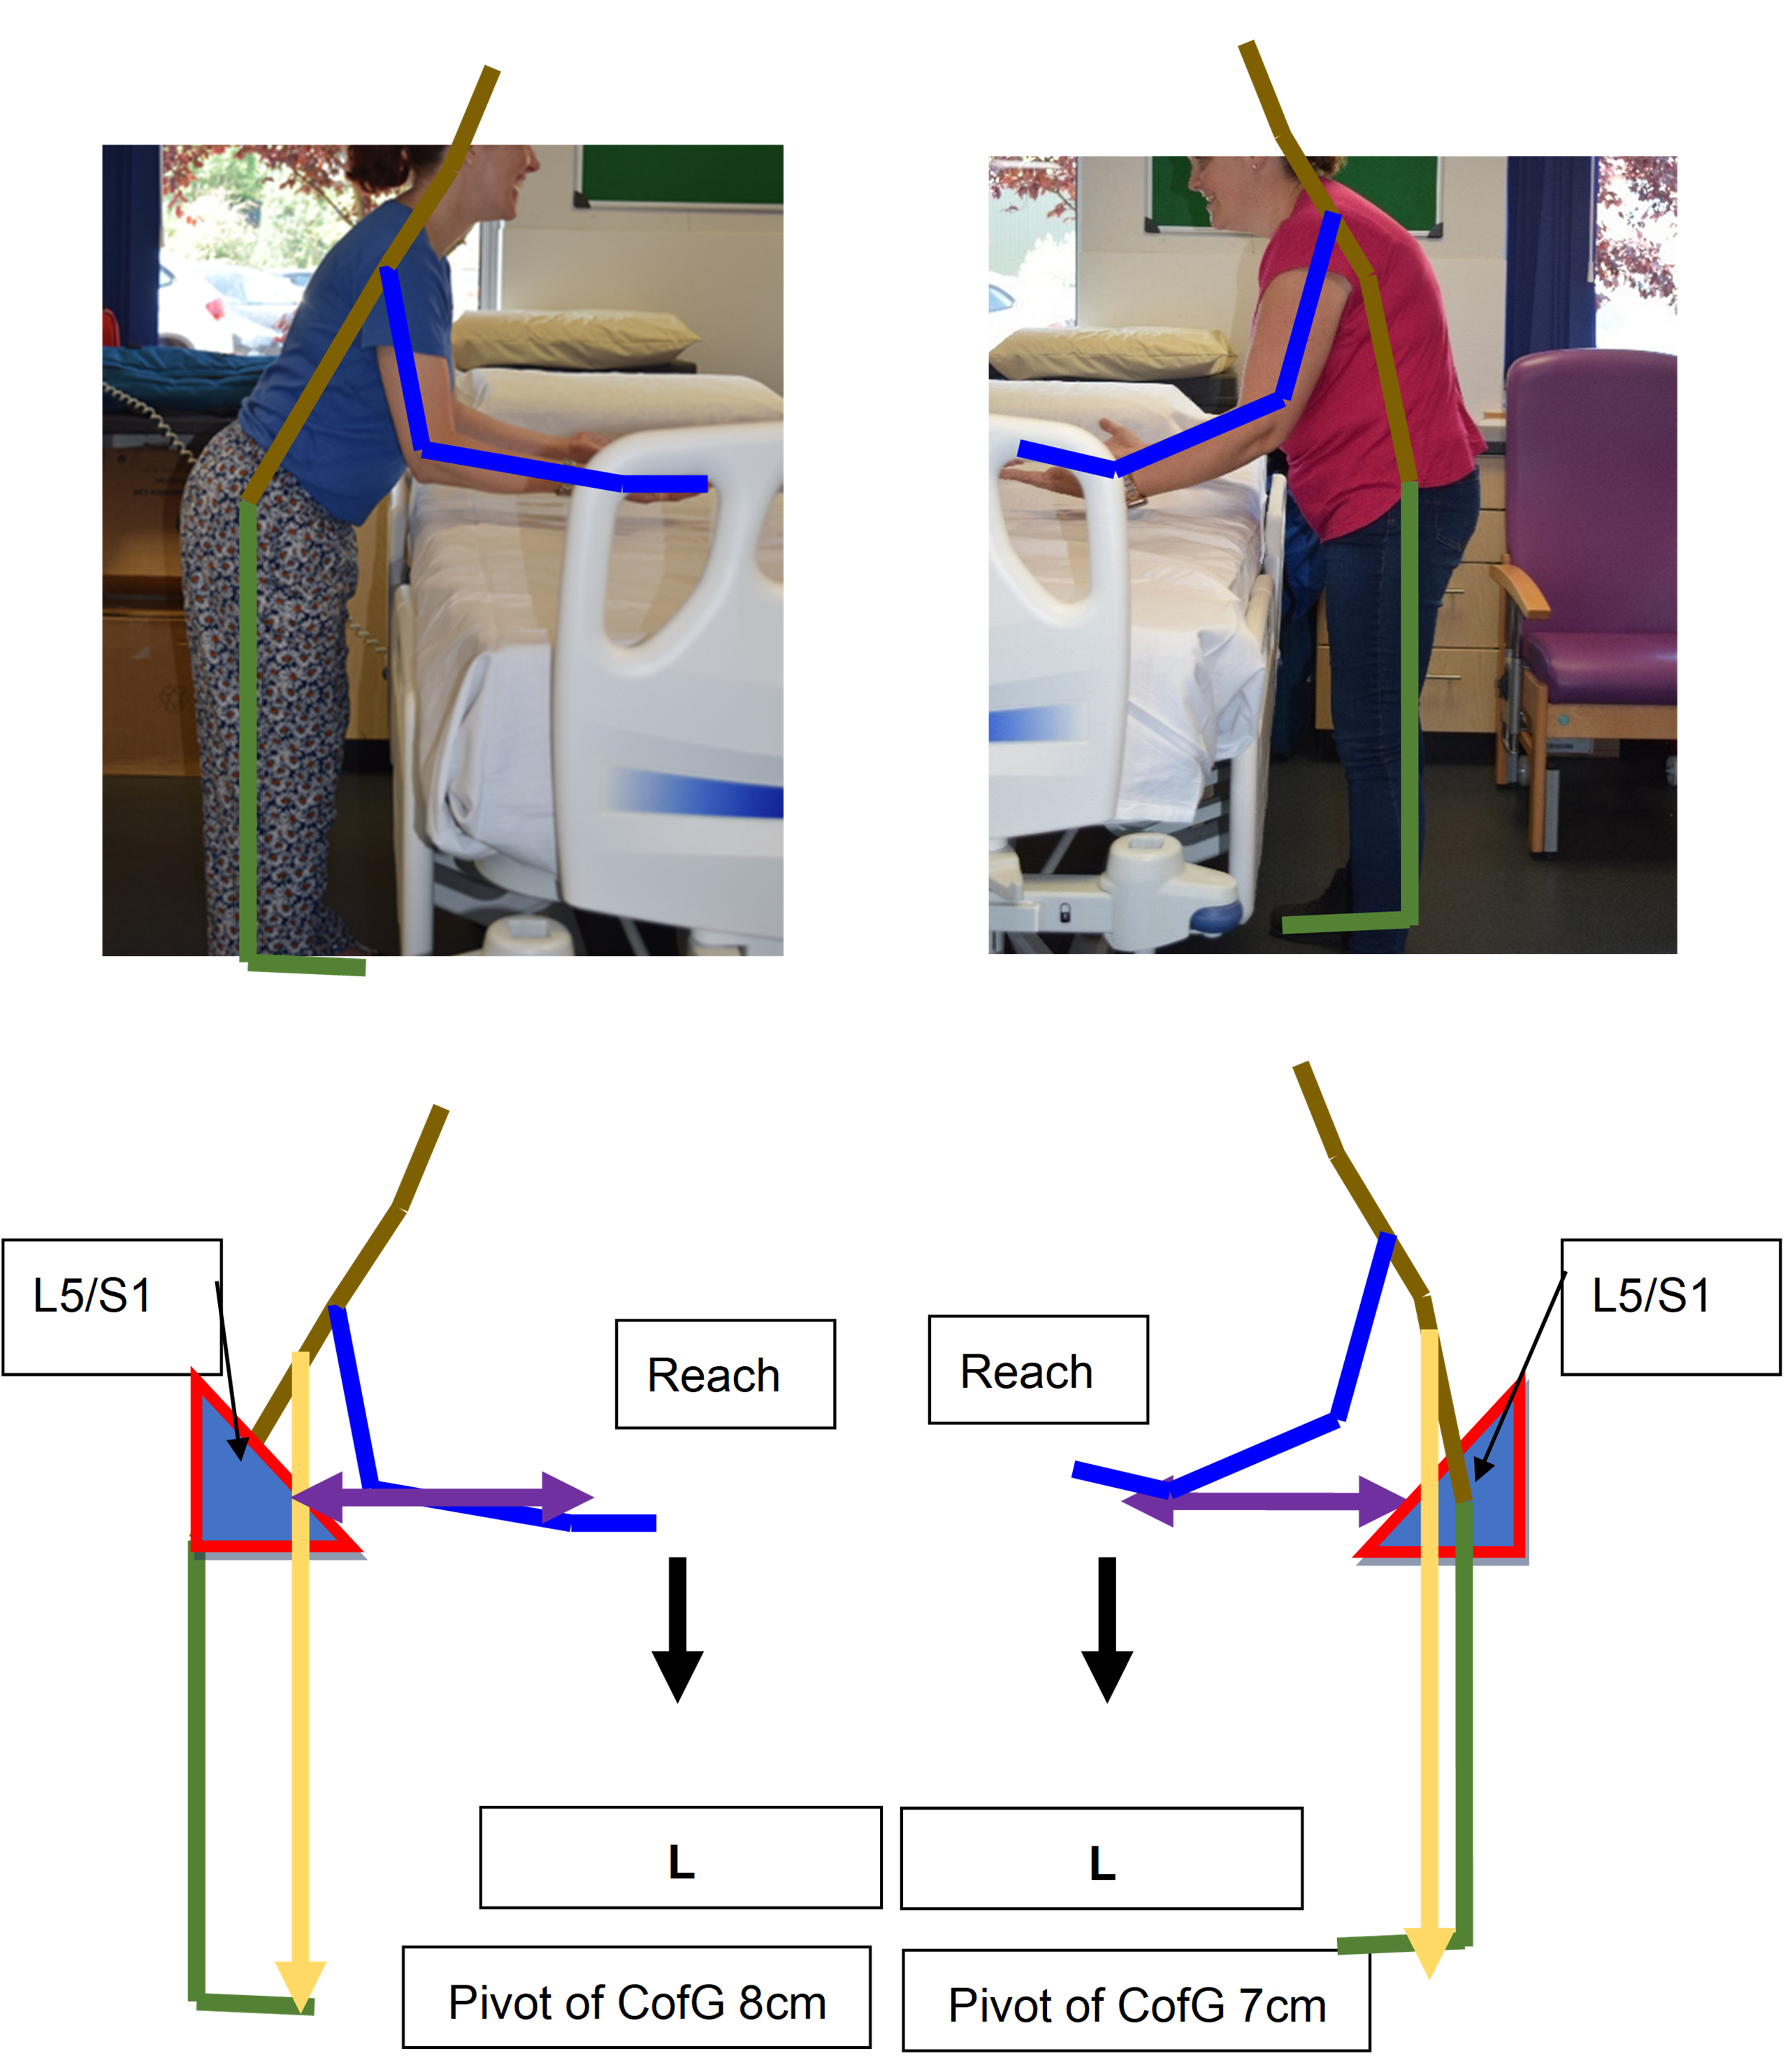 An image demonstrating data collection and biometric analysis